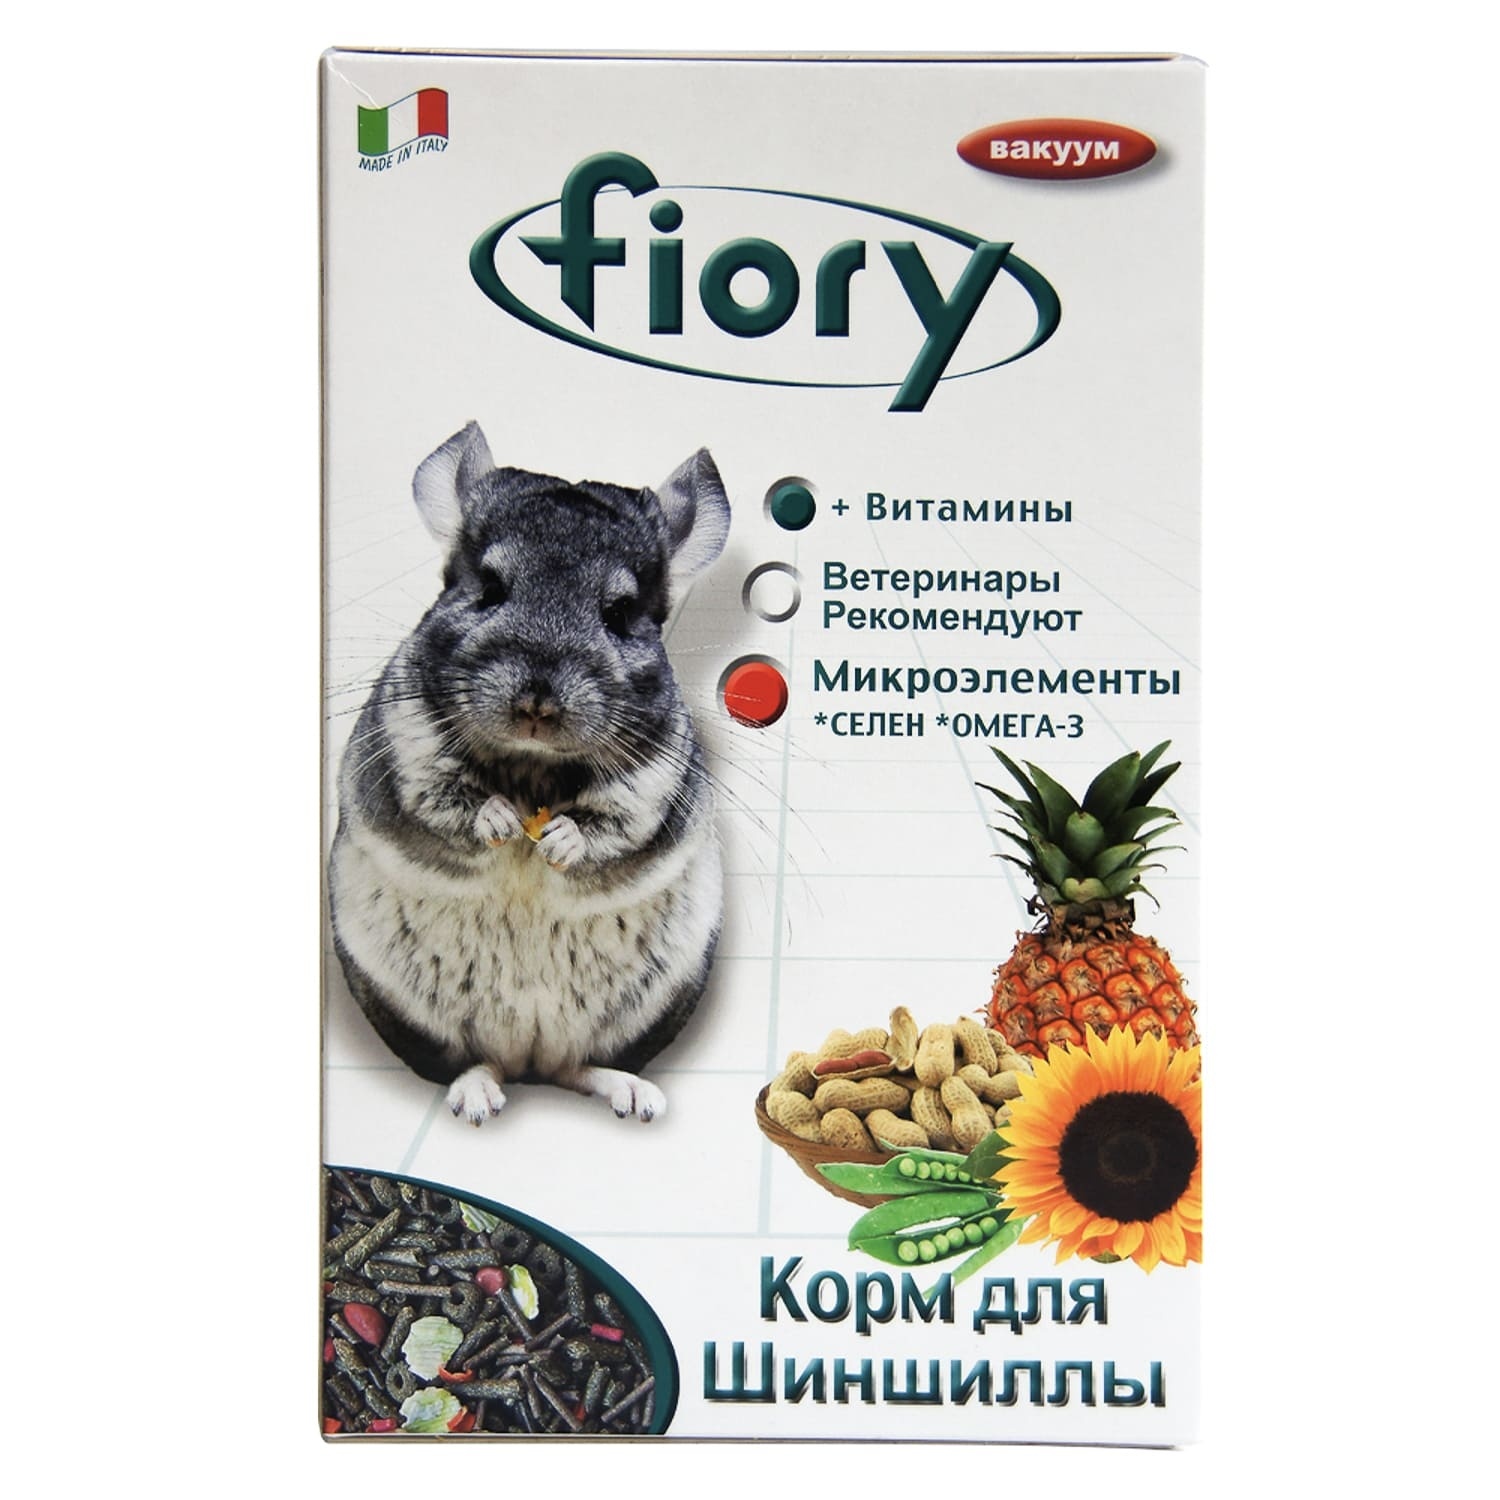 Fiory Fiory корм для шиншилл (800 г) fiory корм для дегу deggy 3шт по 800 г